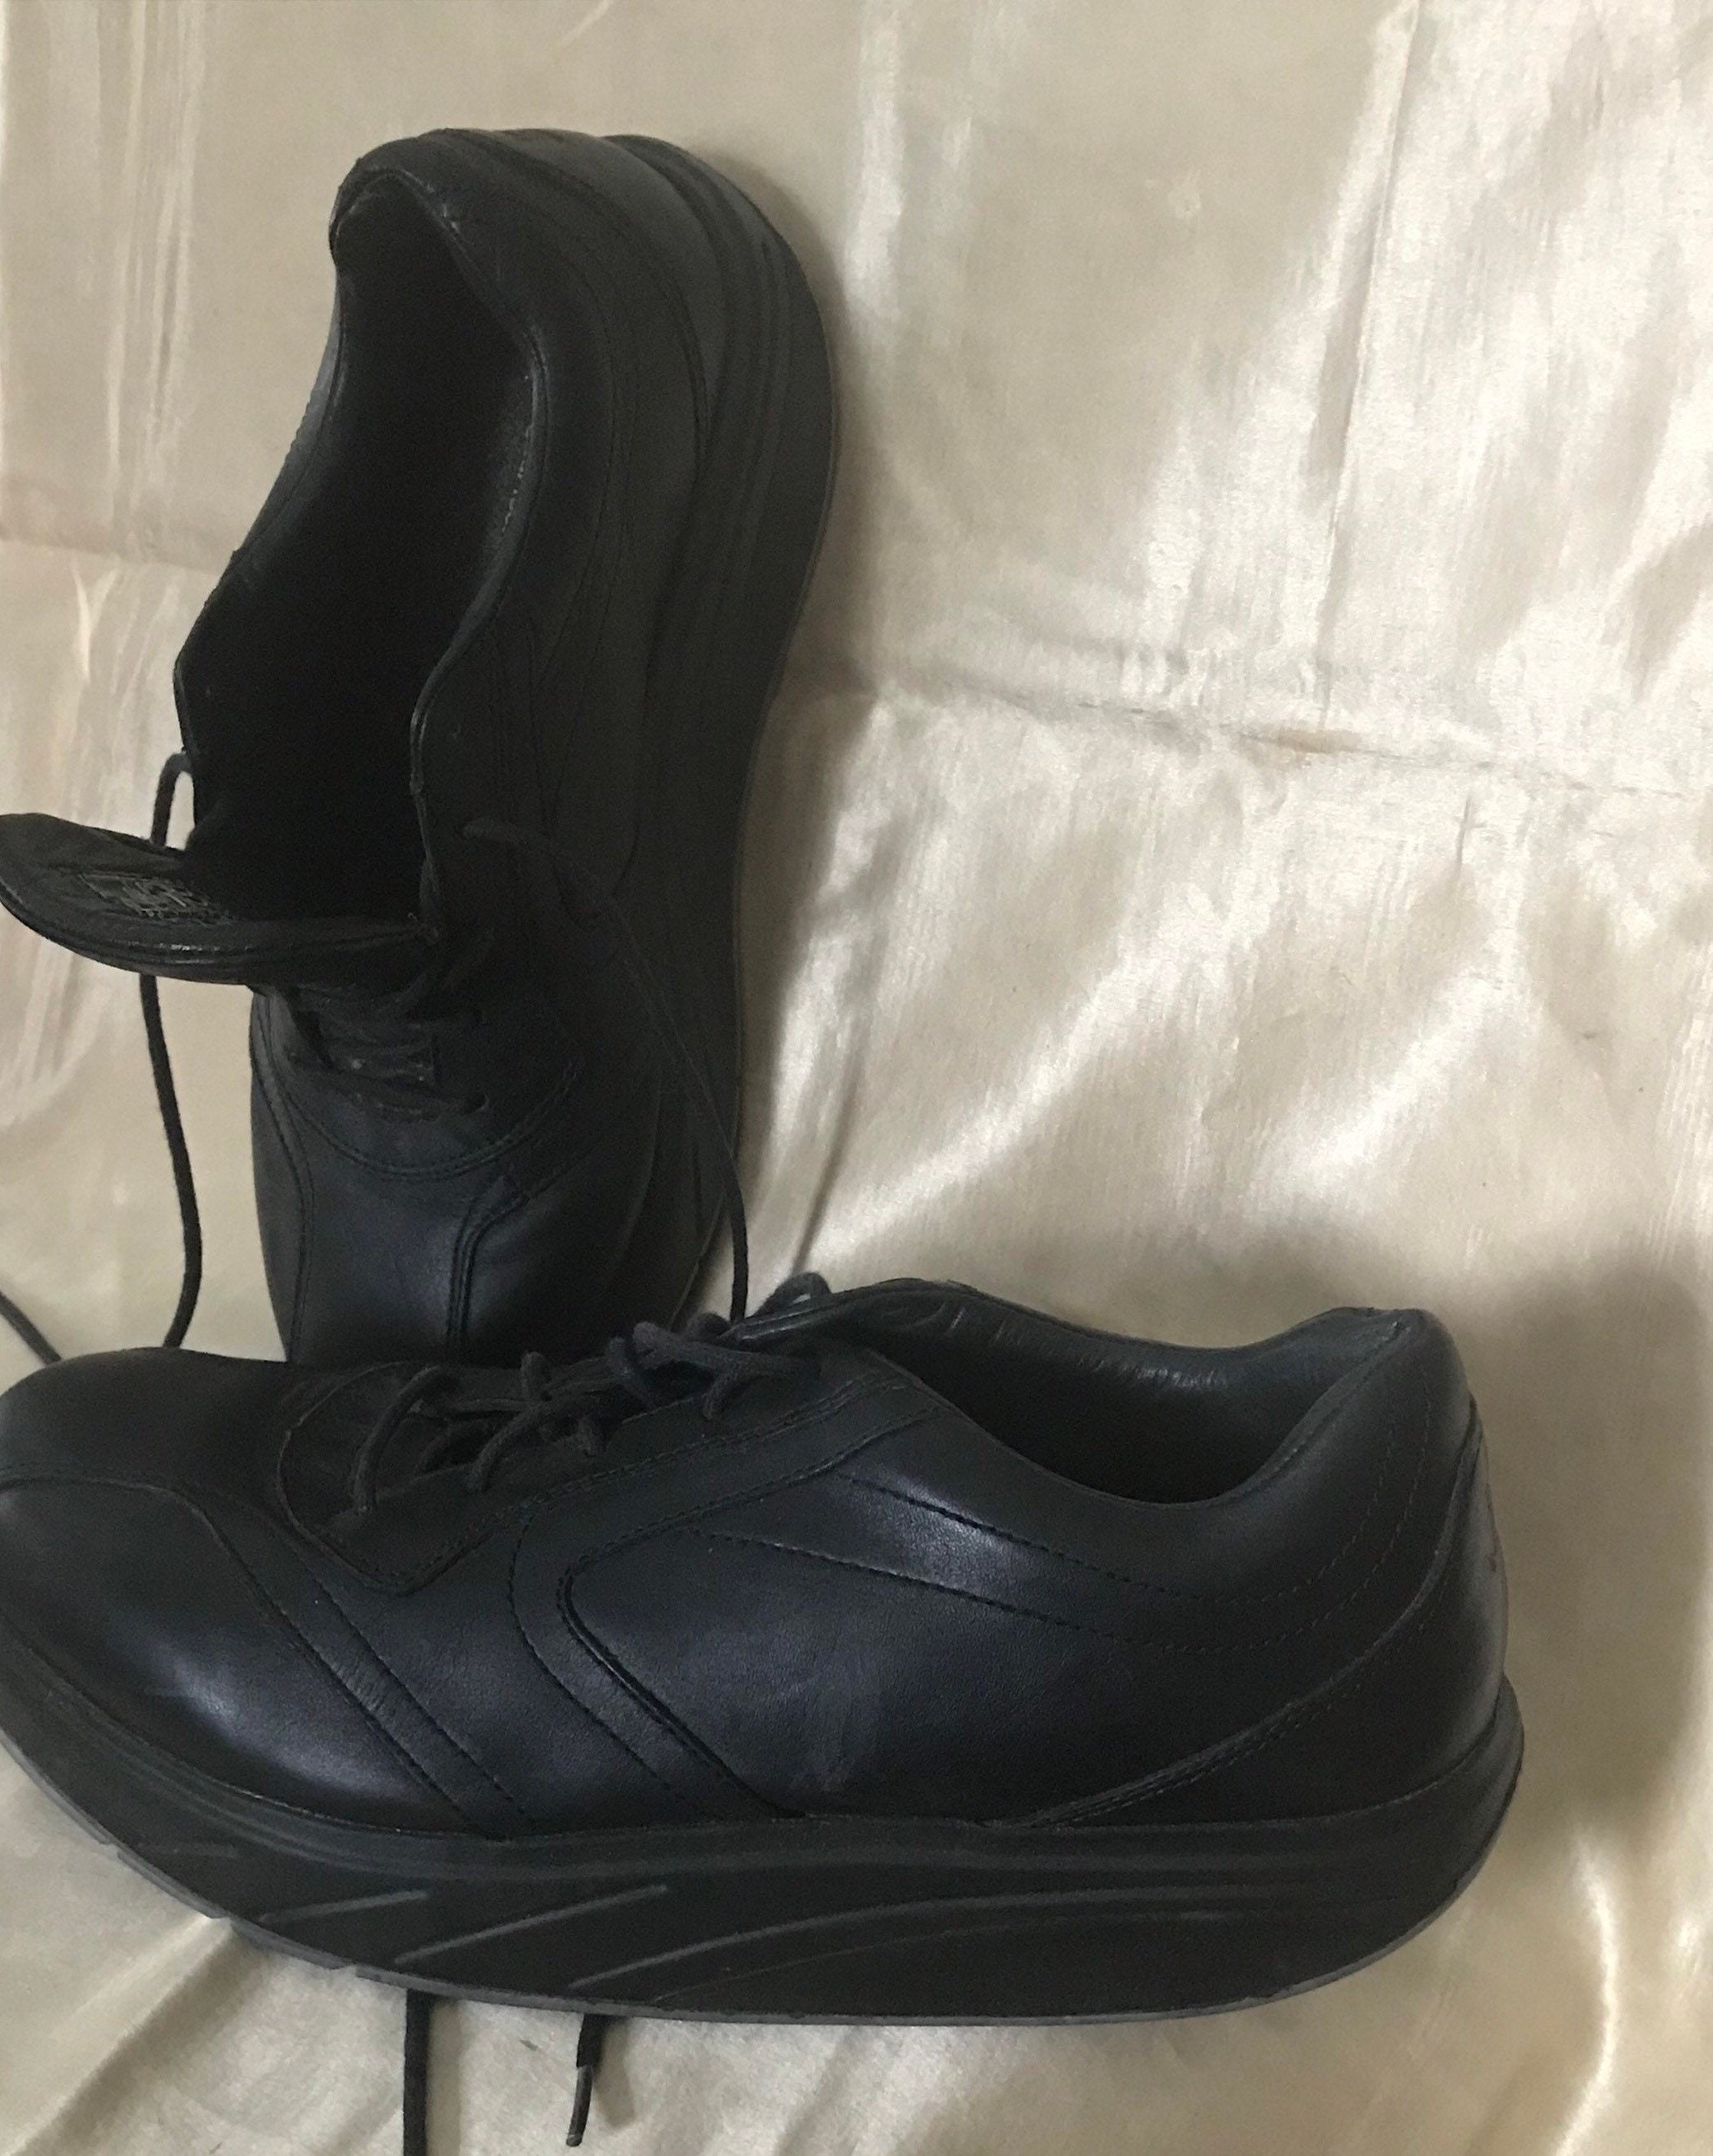 Shoes Black MBT Balance Shoe - Etsy